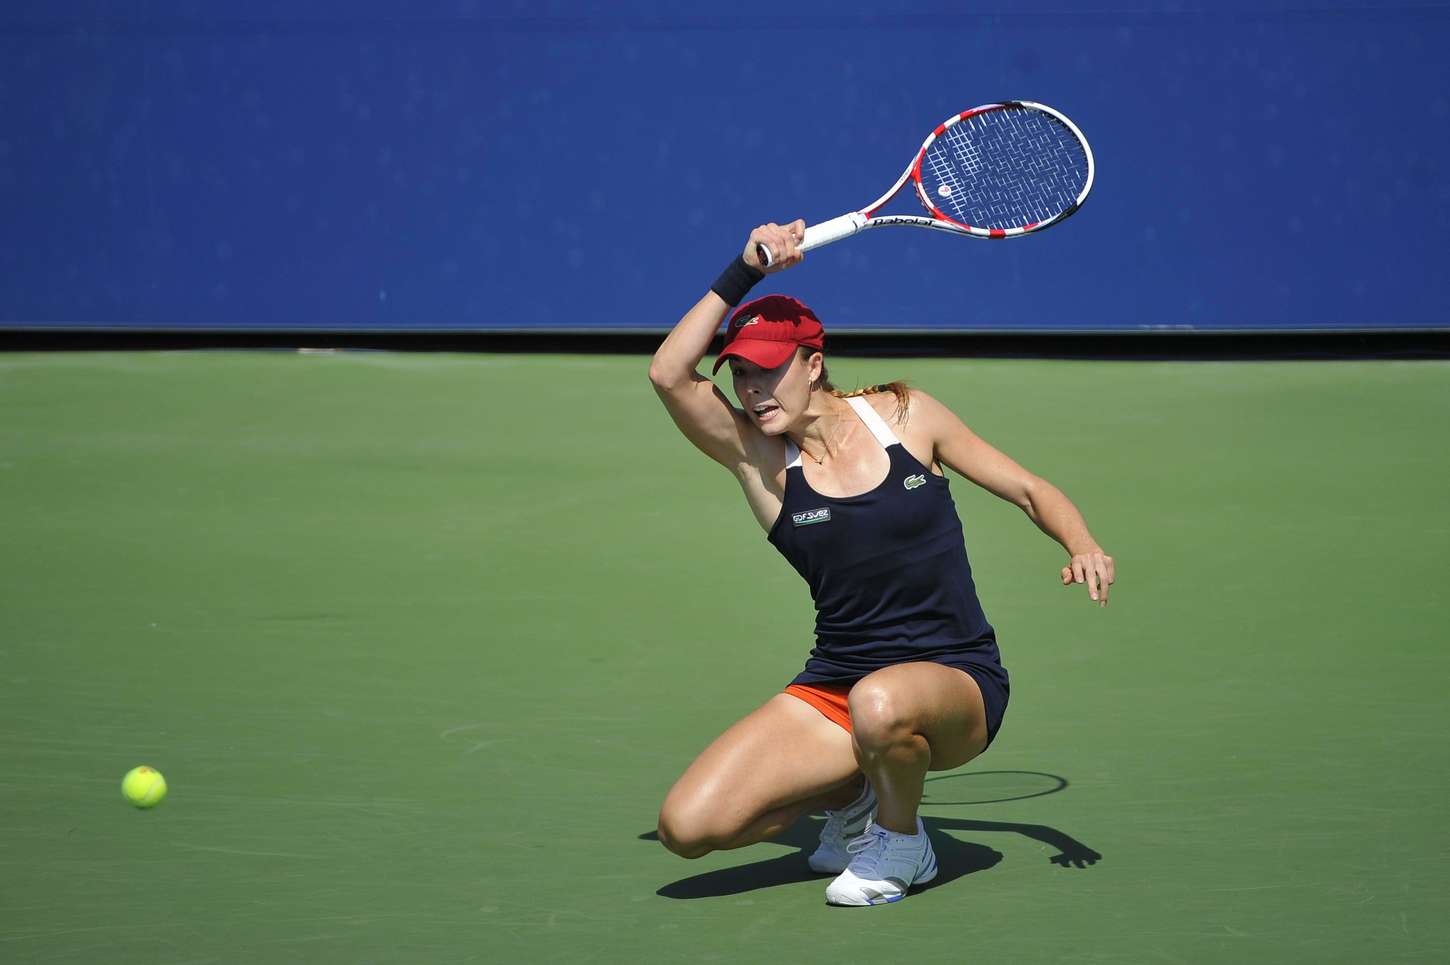 Alize Cornet 2014 : Alize Cornet - 2014 U.S. Open tennis tournament in New ...